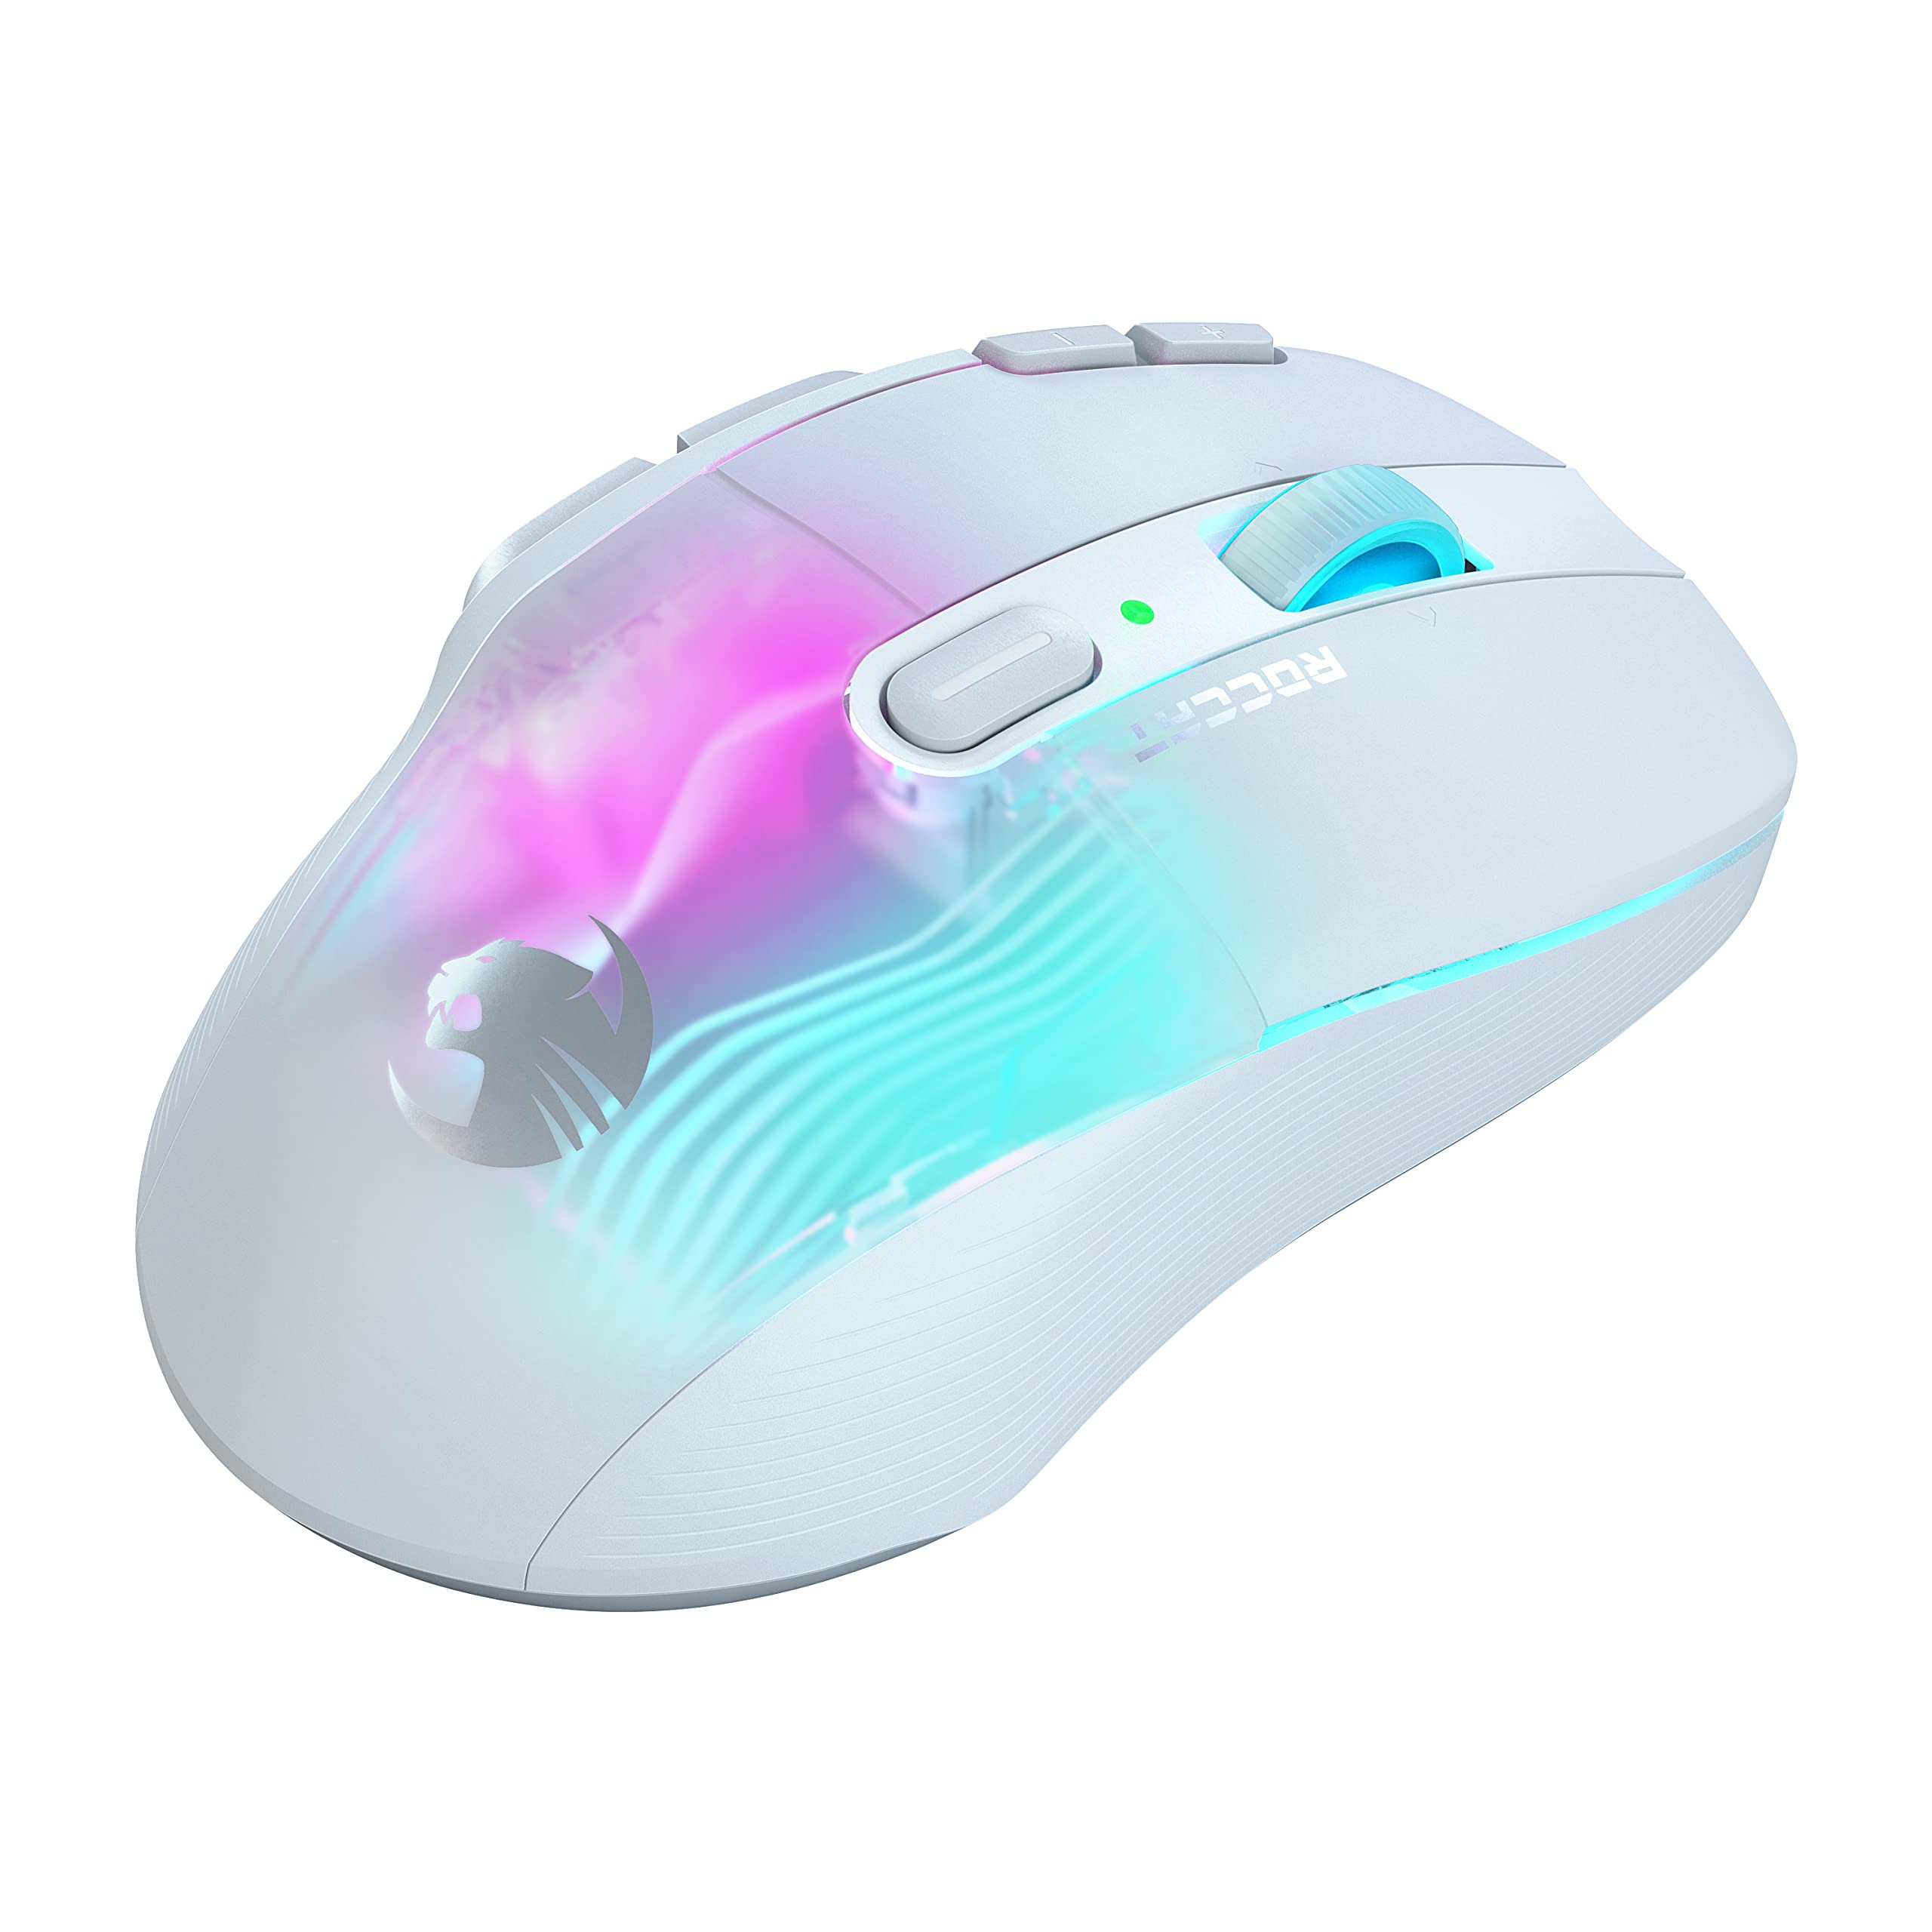 ROCCAT Kone XP Air – Wireless Customizable Ergonomic RGB Gaming Mouse, 19K DPI Optical Sensor, 100-hour Battery & Charging Dock, 29 Programmable Inputs & AIMO RGB Lighting, 4D Wheel – White